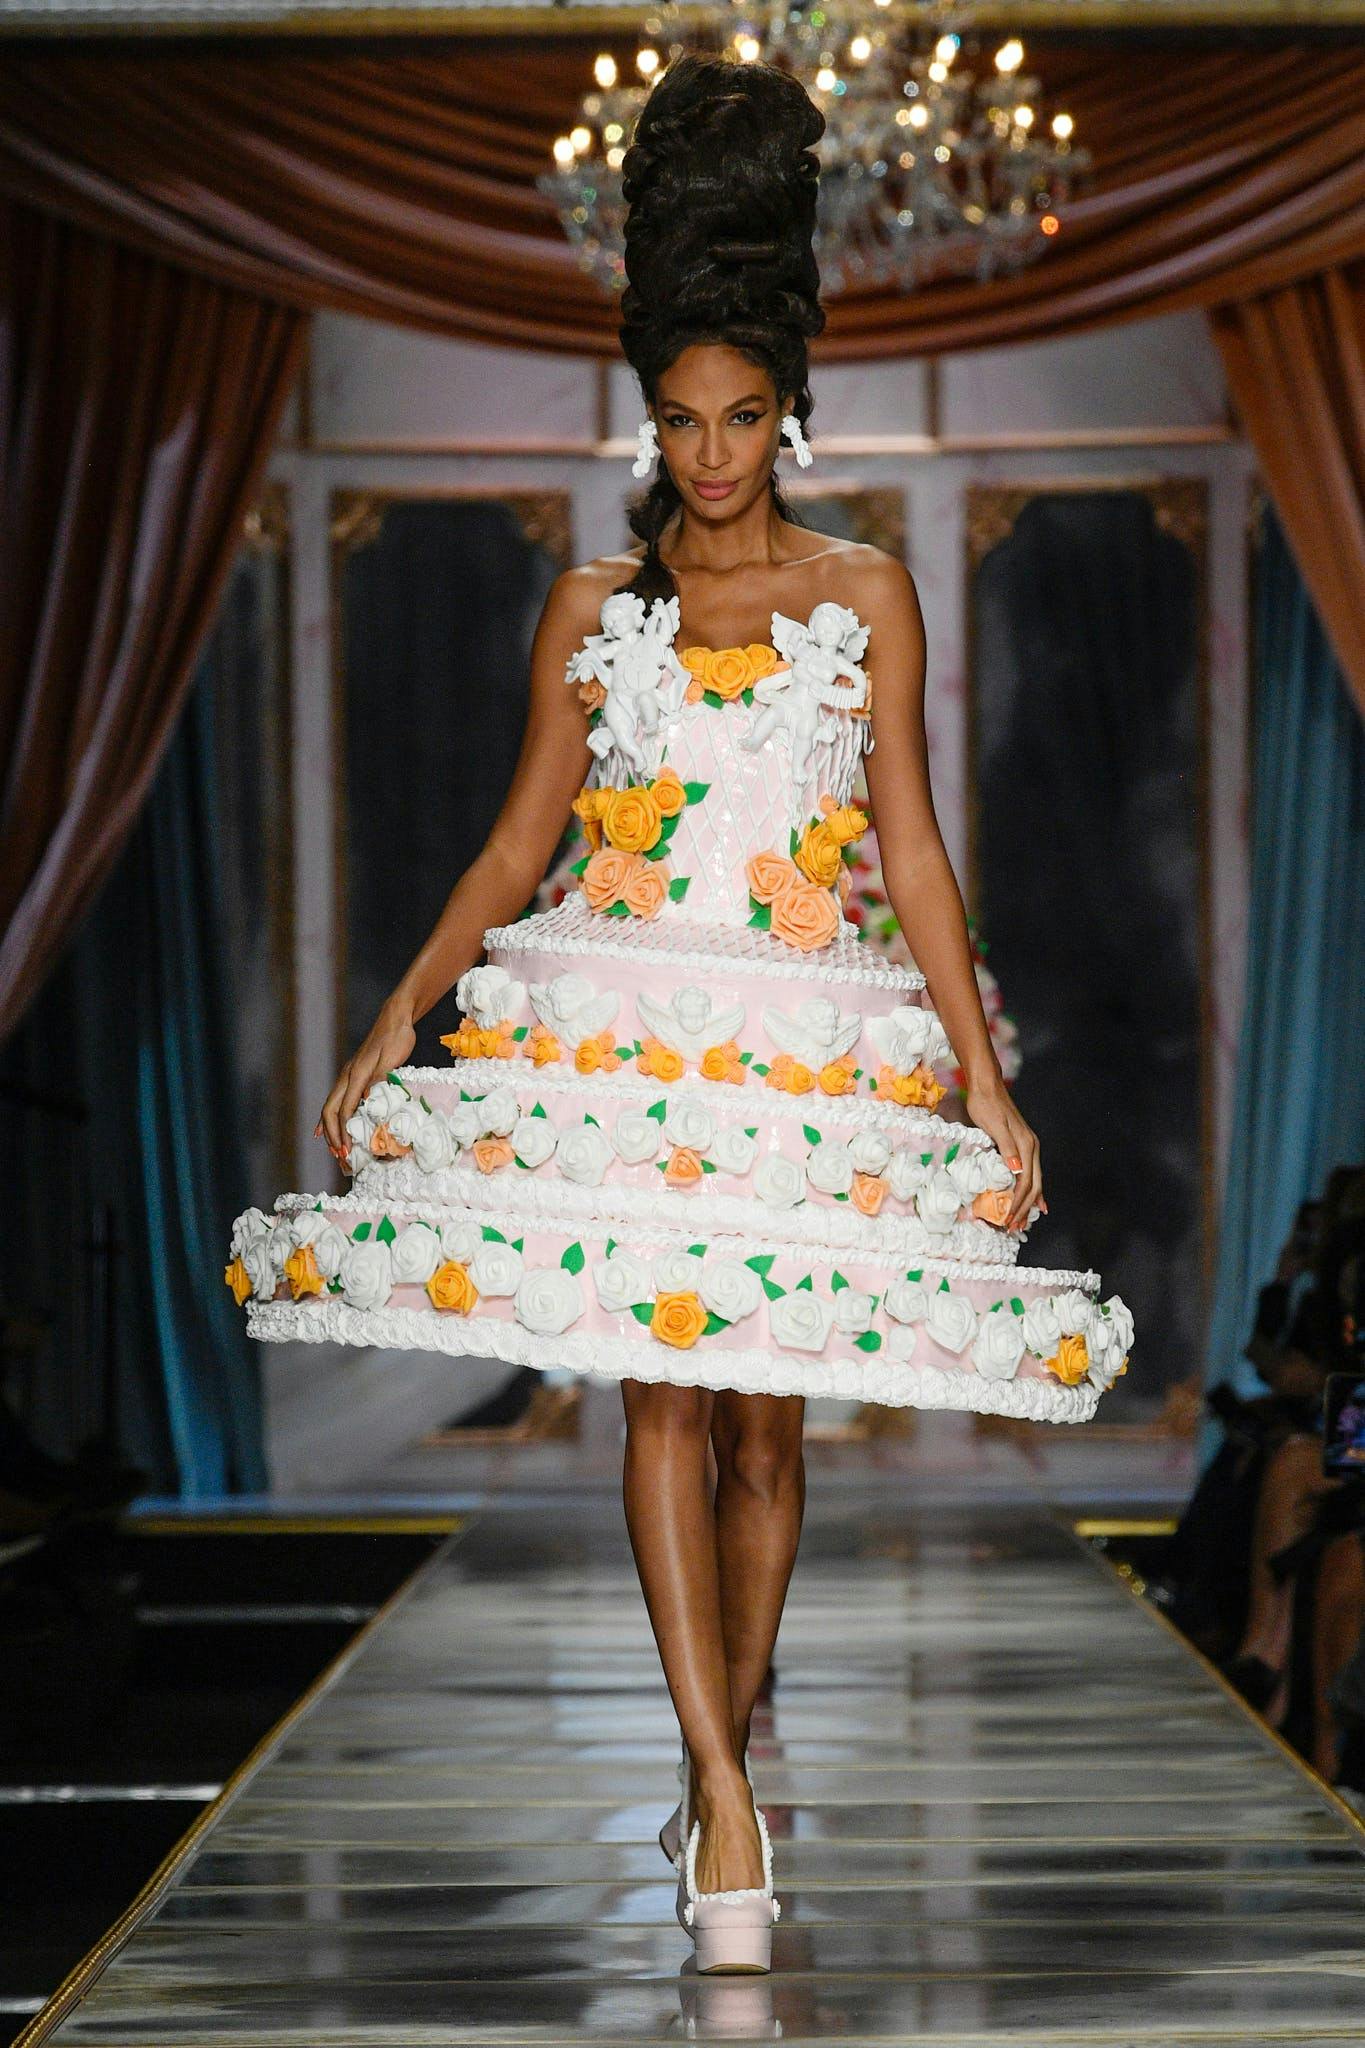 a model in a cake shaped dress